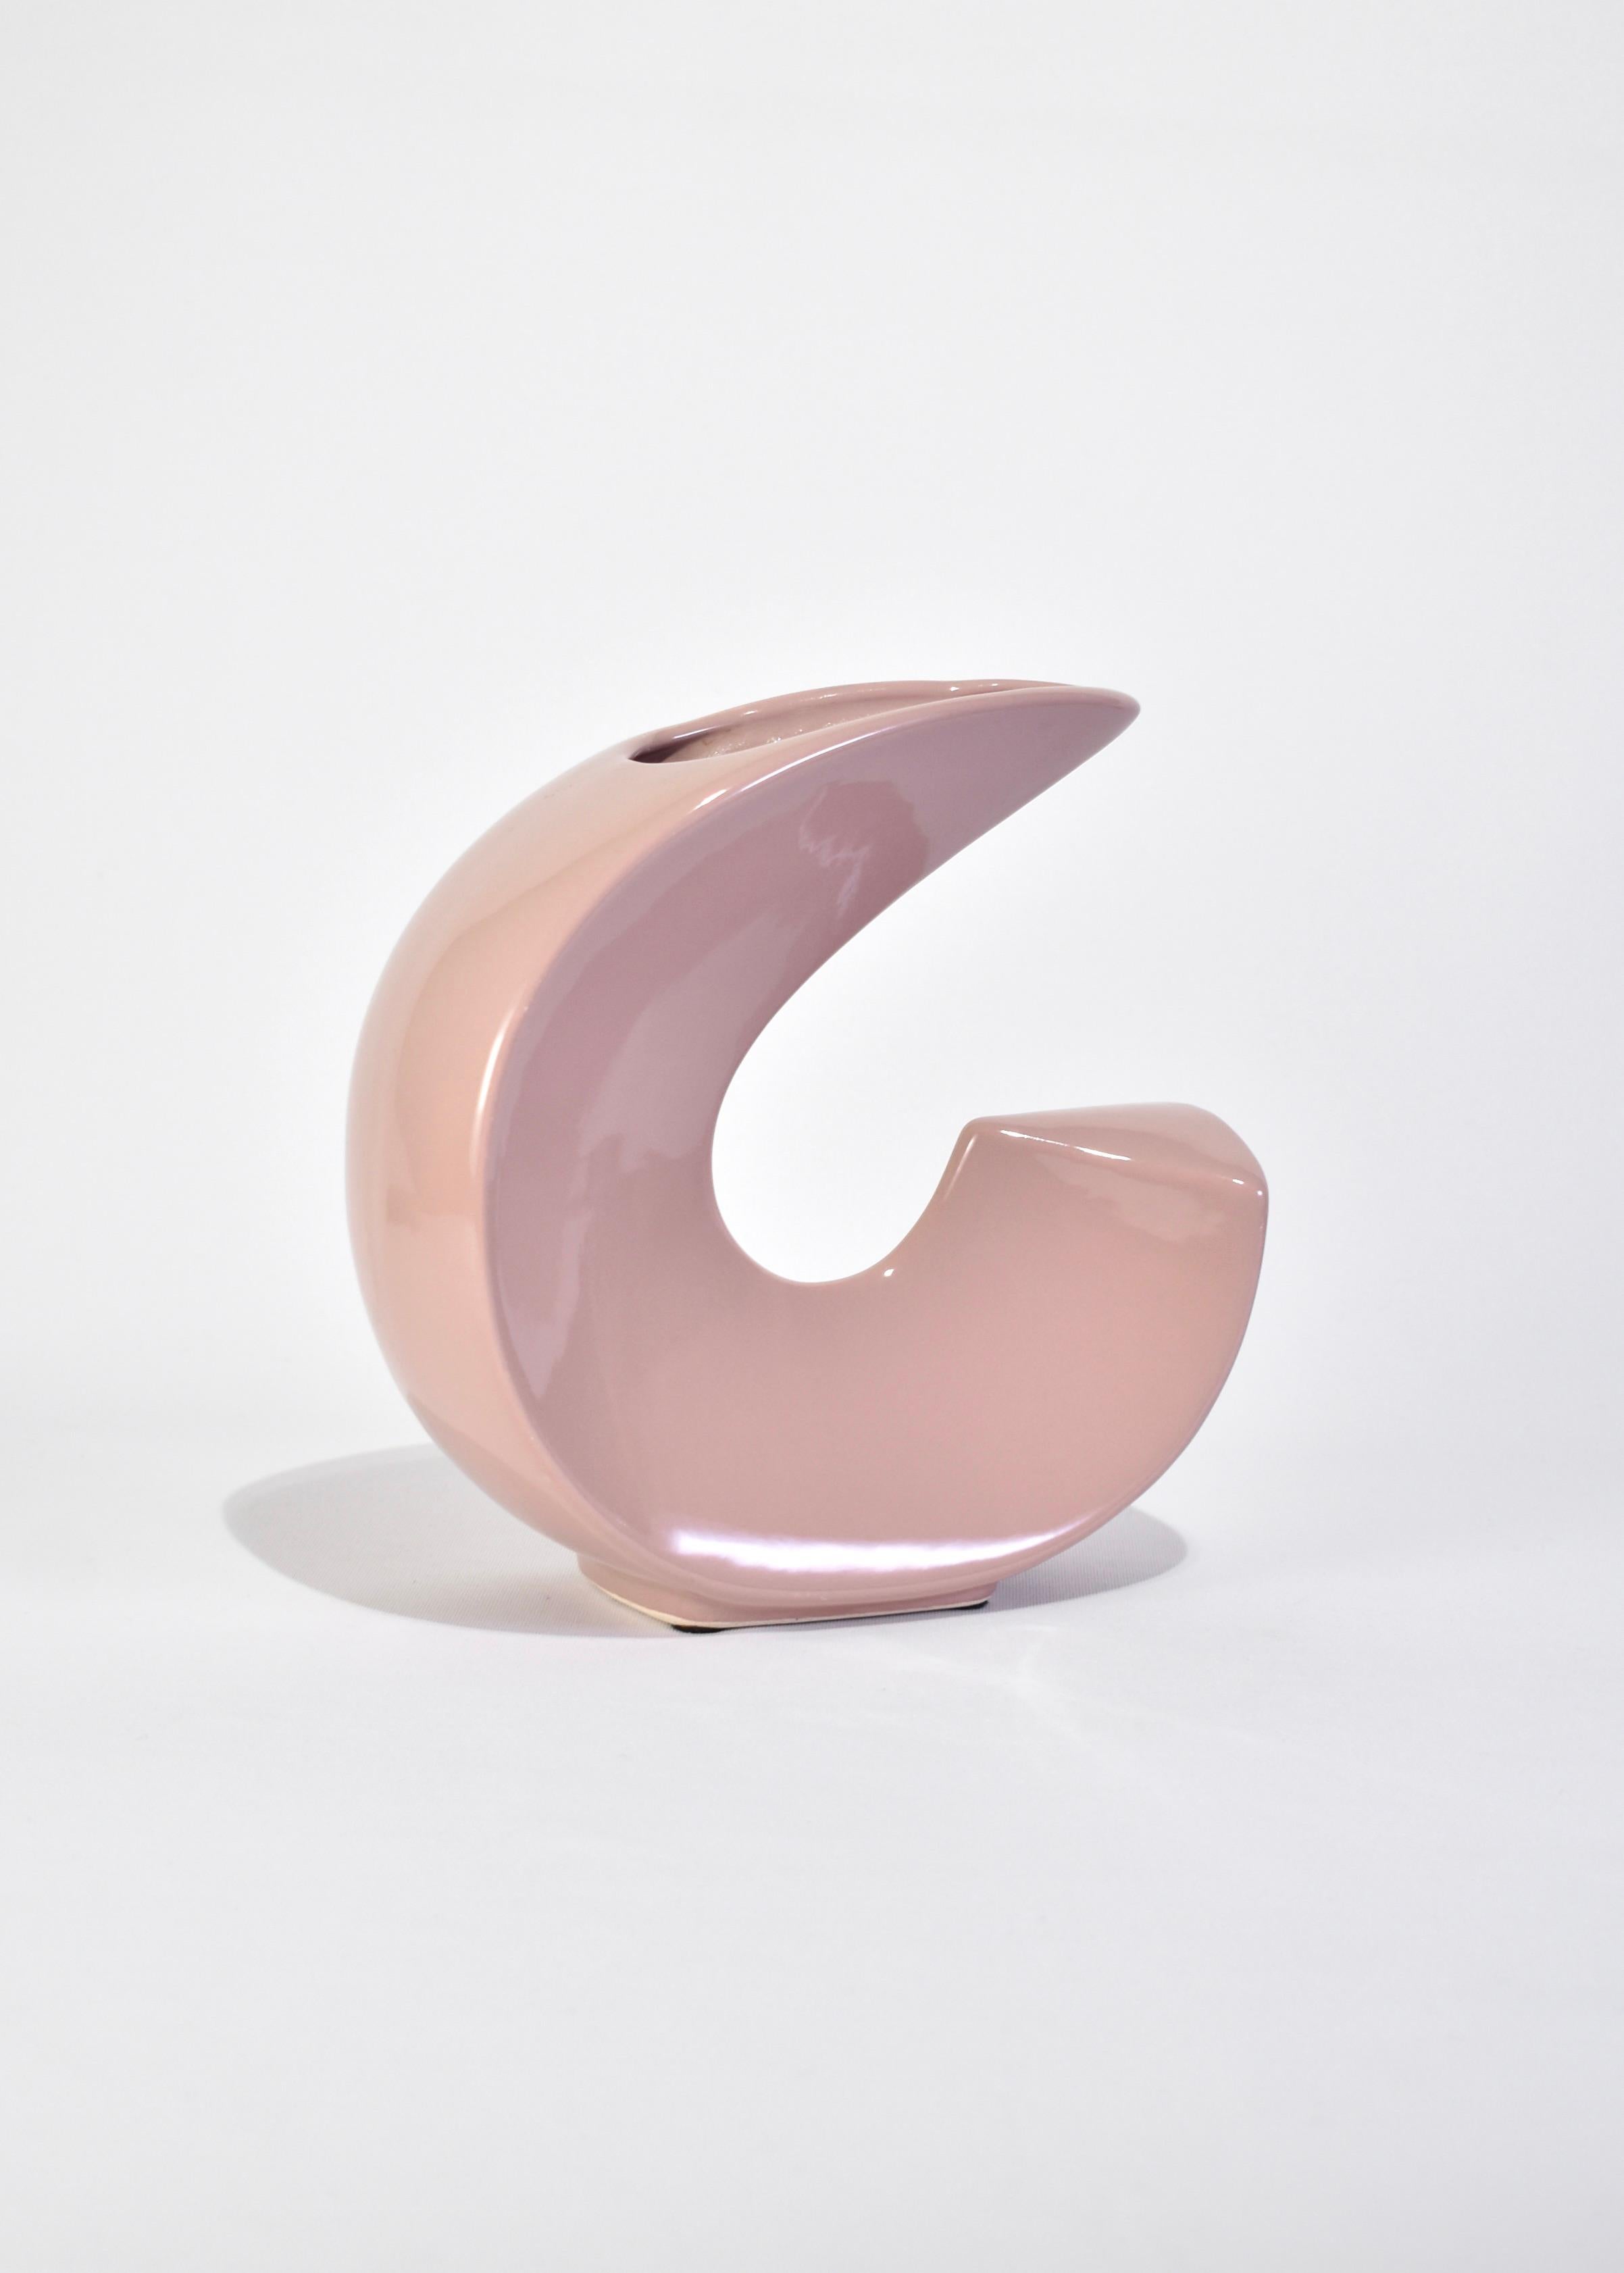 Vintage ceramic vase in a curved shape with glossy light pink glaze. Stamped on base.